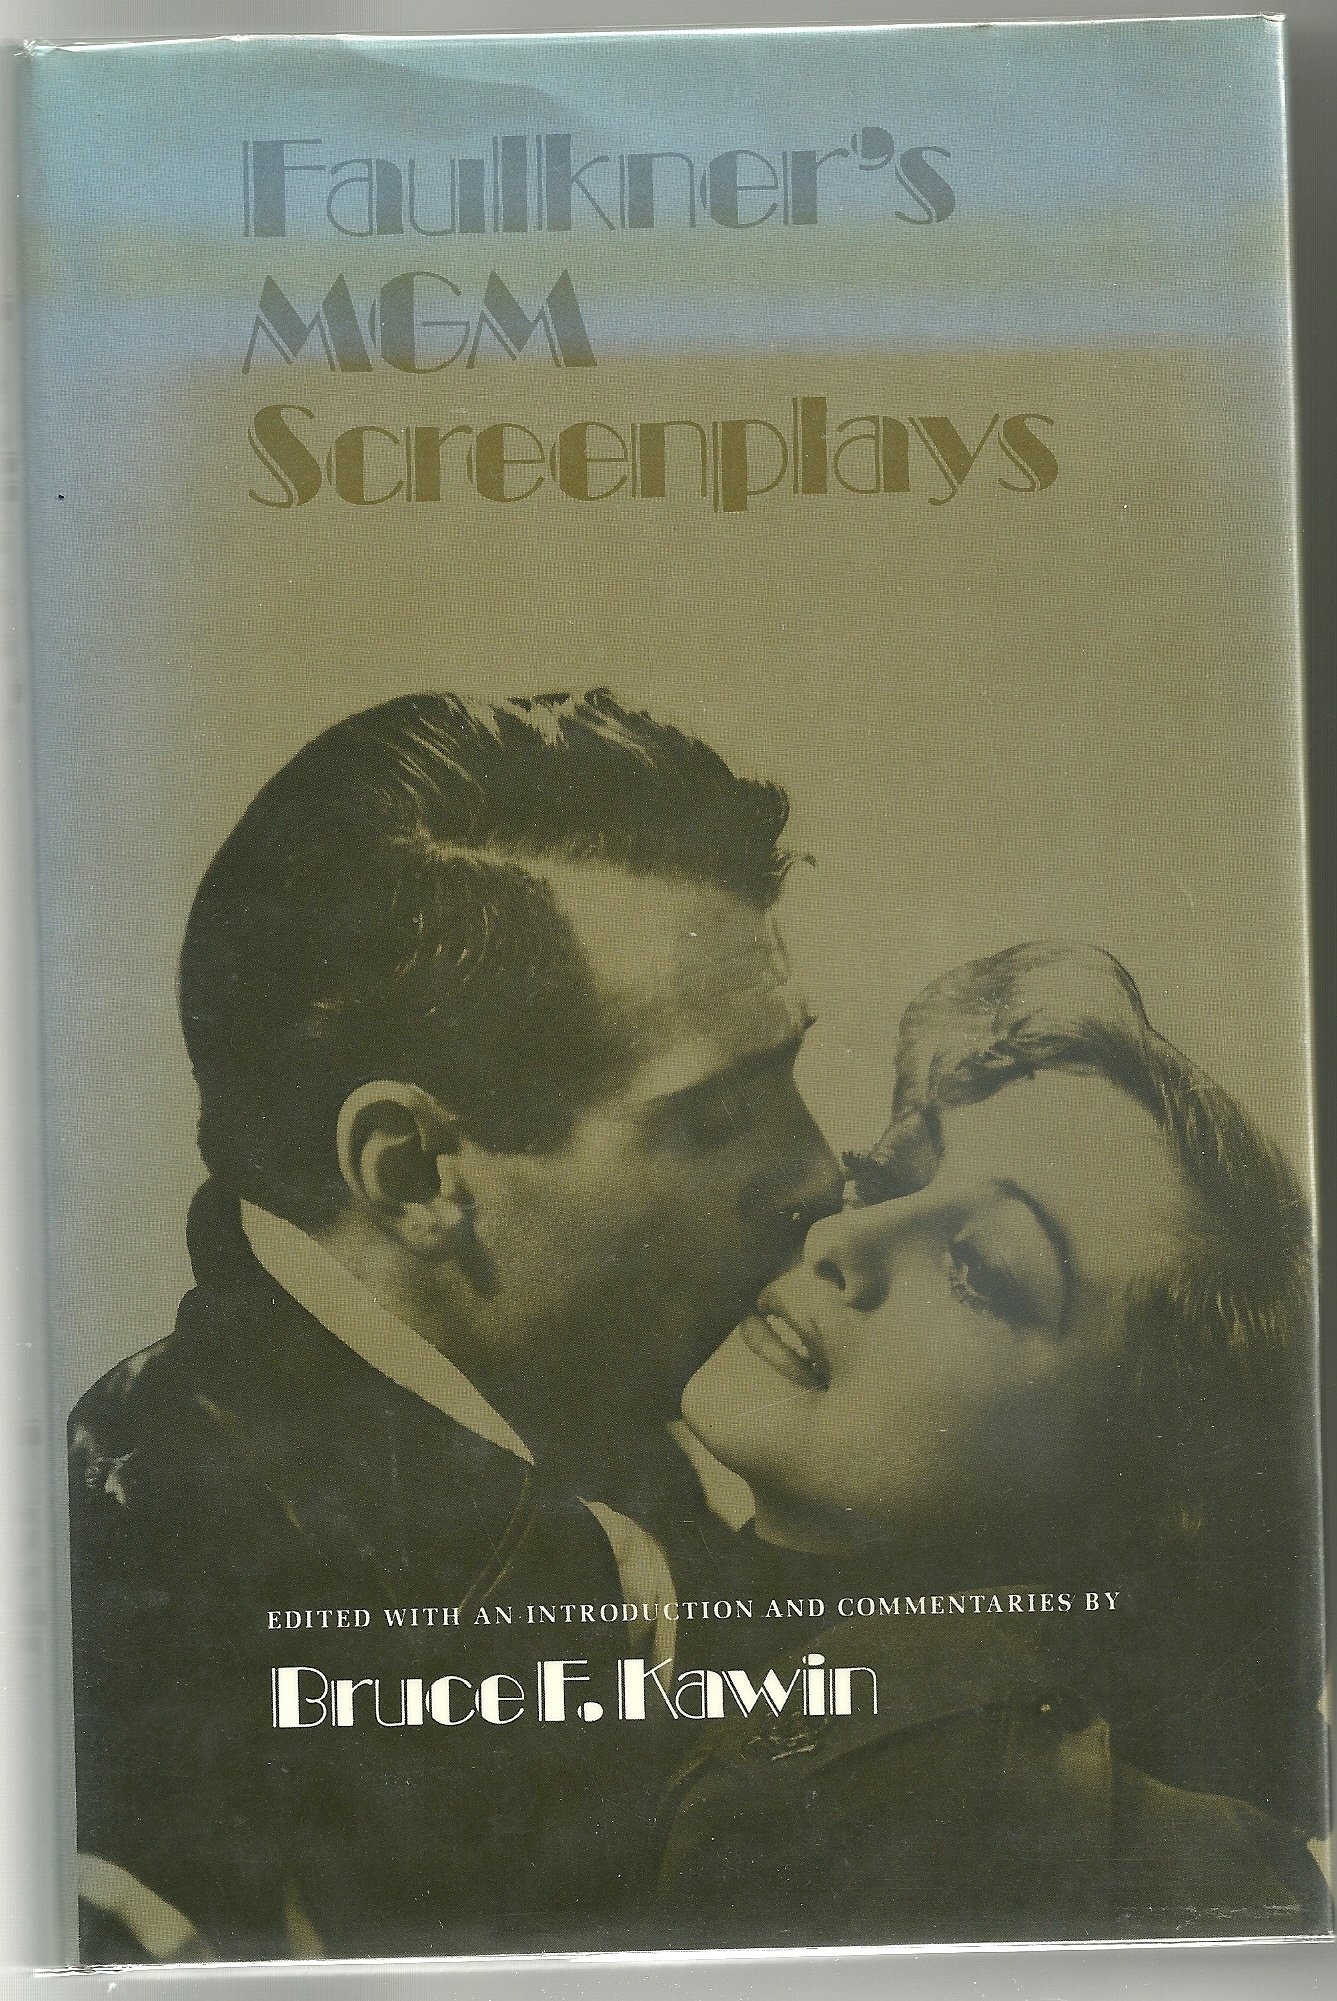 Faulkner's MGM screenplays magazine reviews